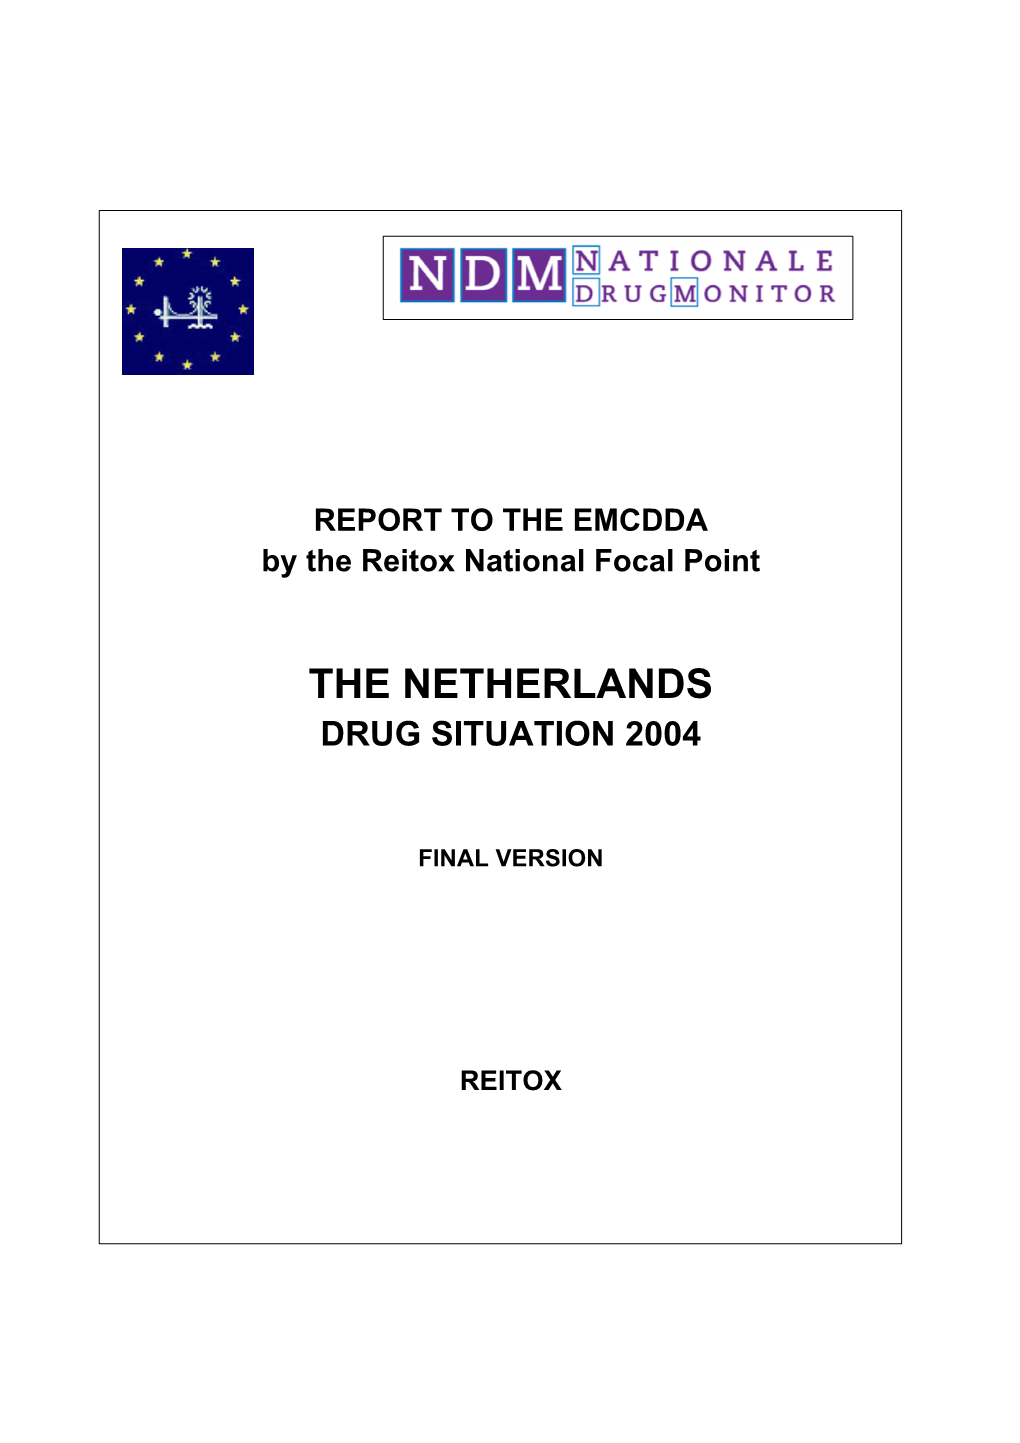 The Netherlands Drug Situation 2004